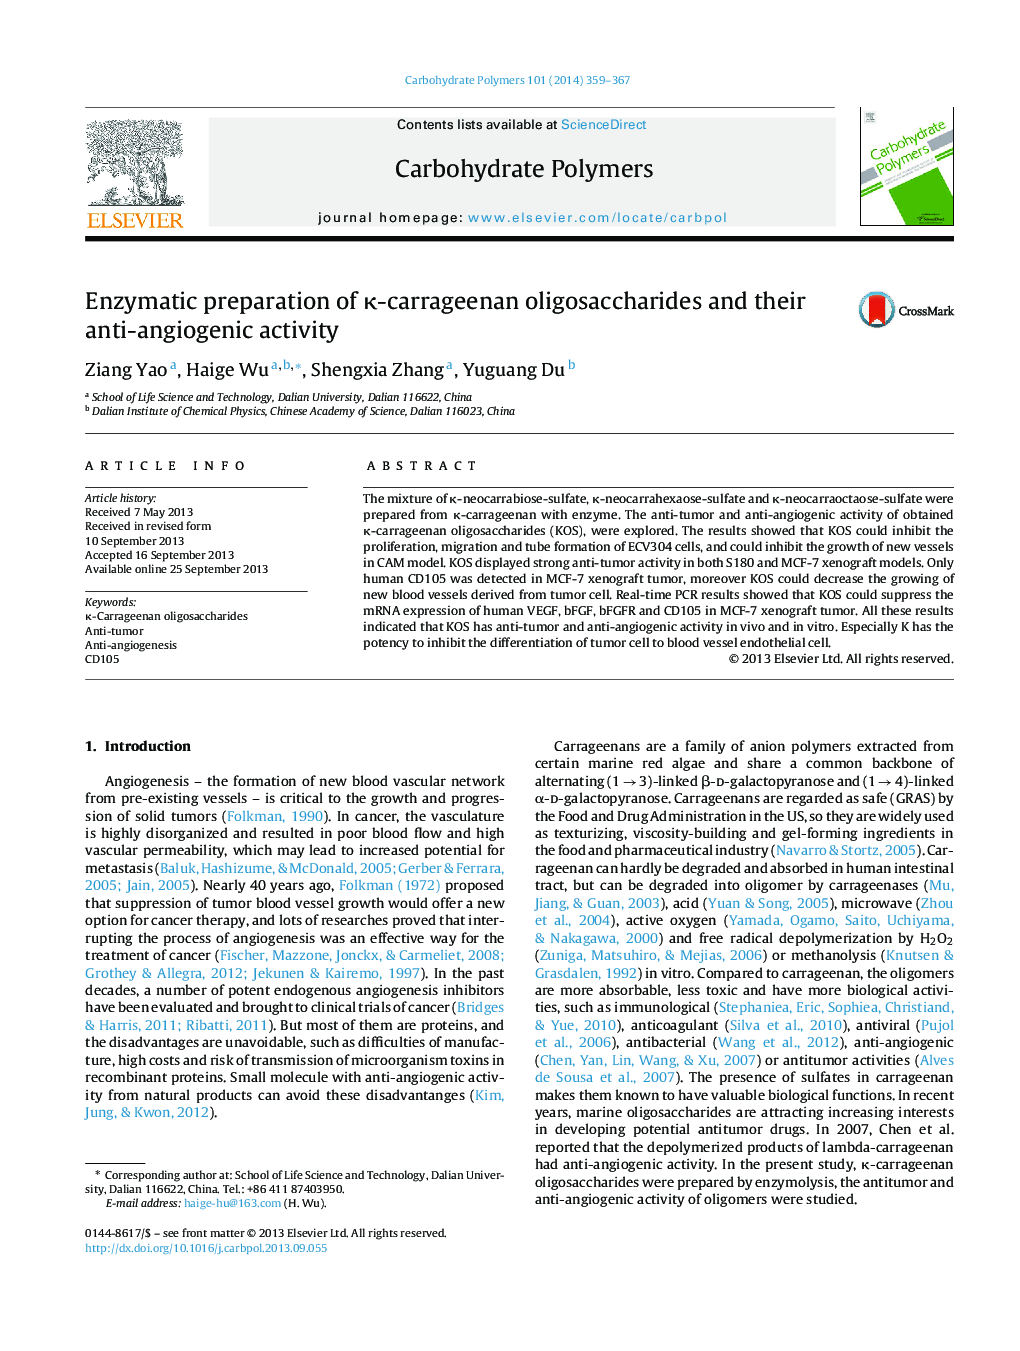 Enzymatic preparation of Îº-carrageenan oligosaccharides and their anti-angiogenic activity